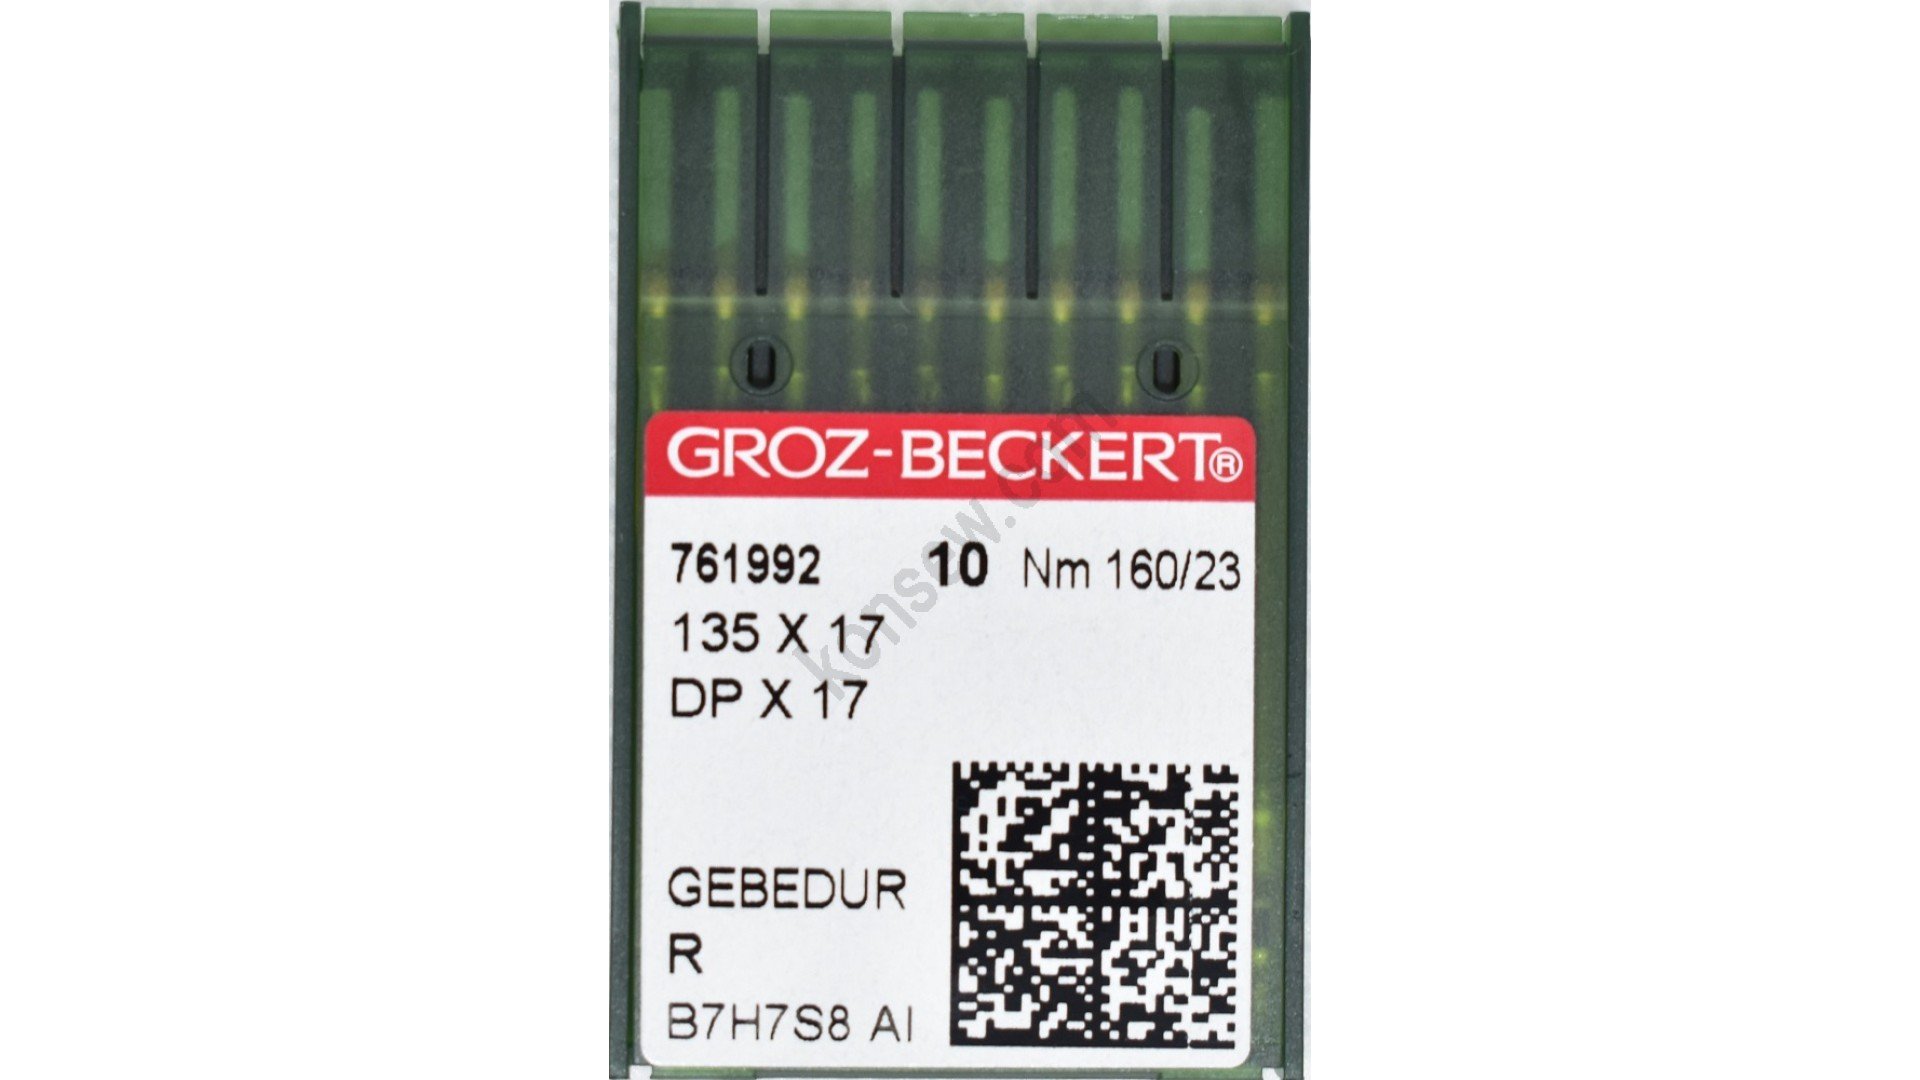 50 Groz-Beckert DPX17 SY3355 Gebedur Titanium for Industrial Walking Foot Machine Needles GROZ-BECKERT Needle 